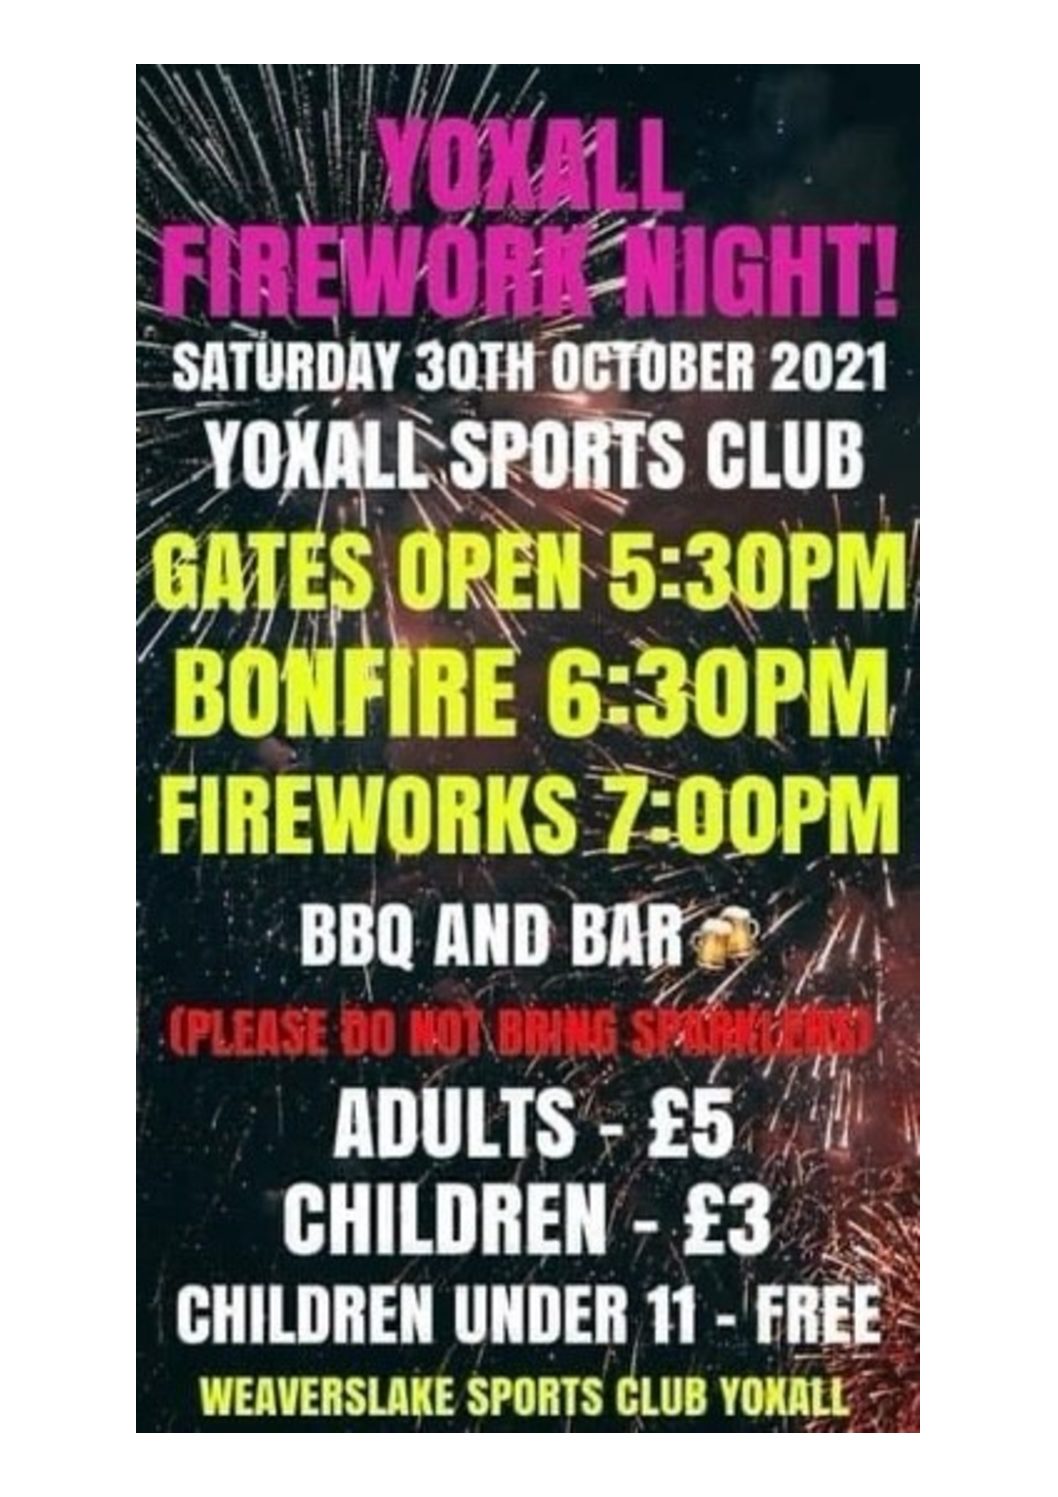 Yoxall Firework Night – Saturday 30th October 2021